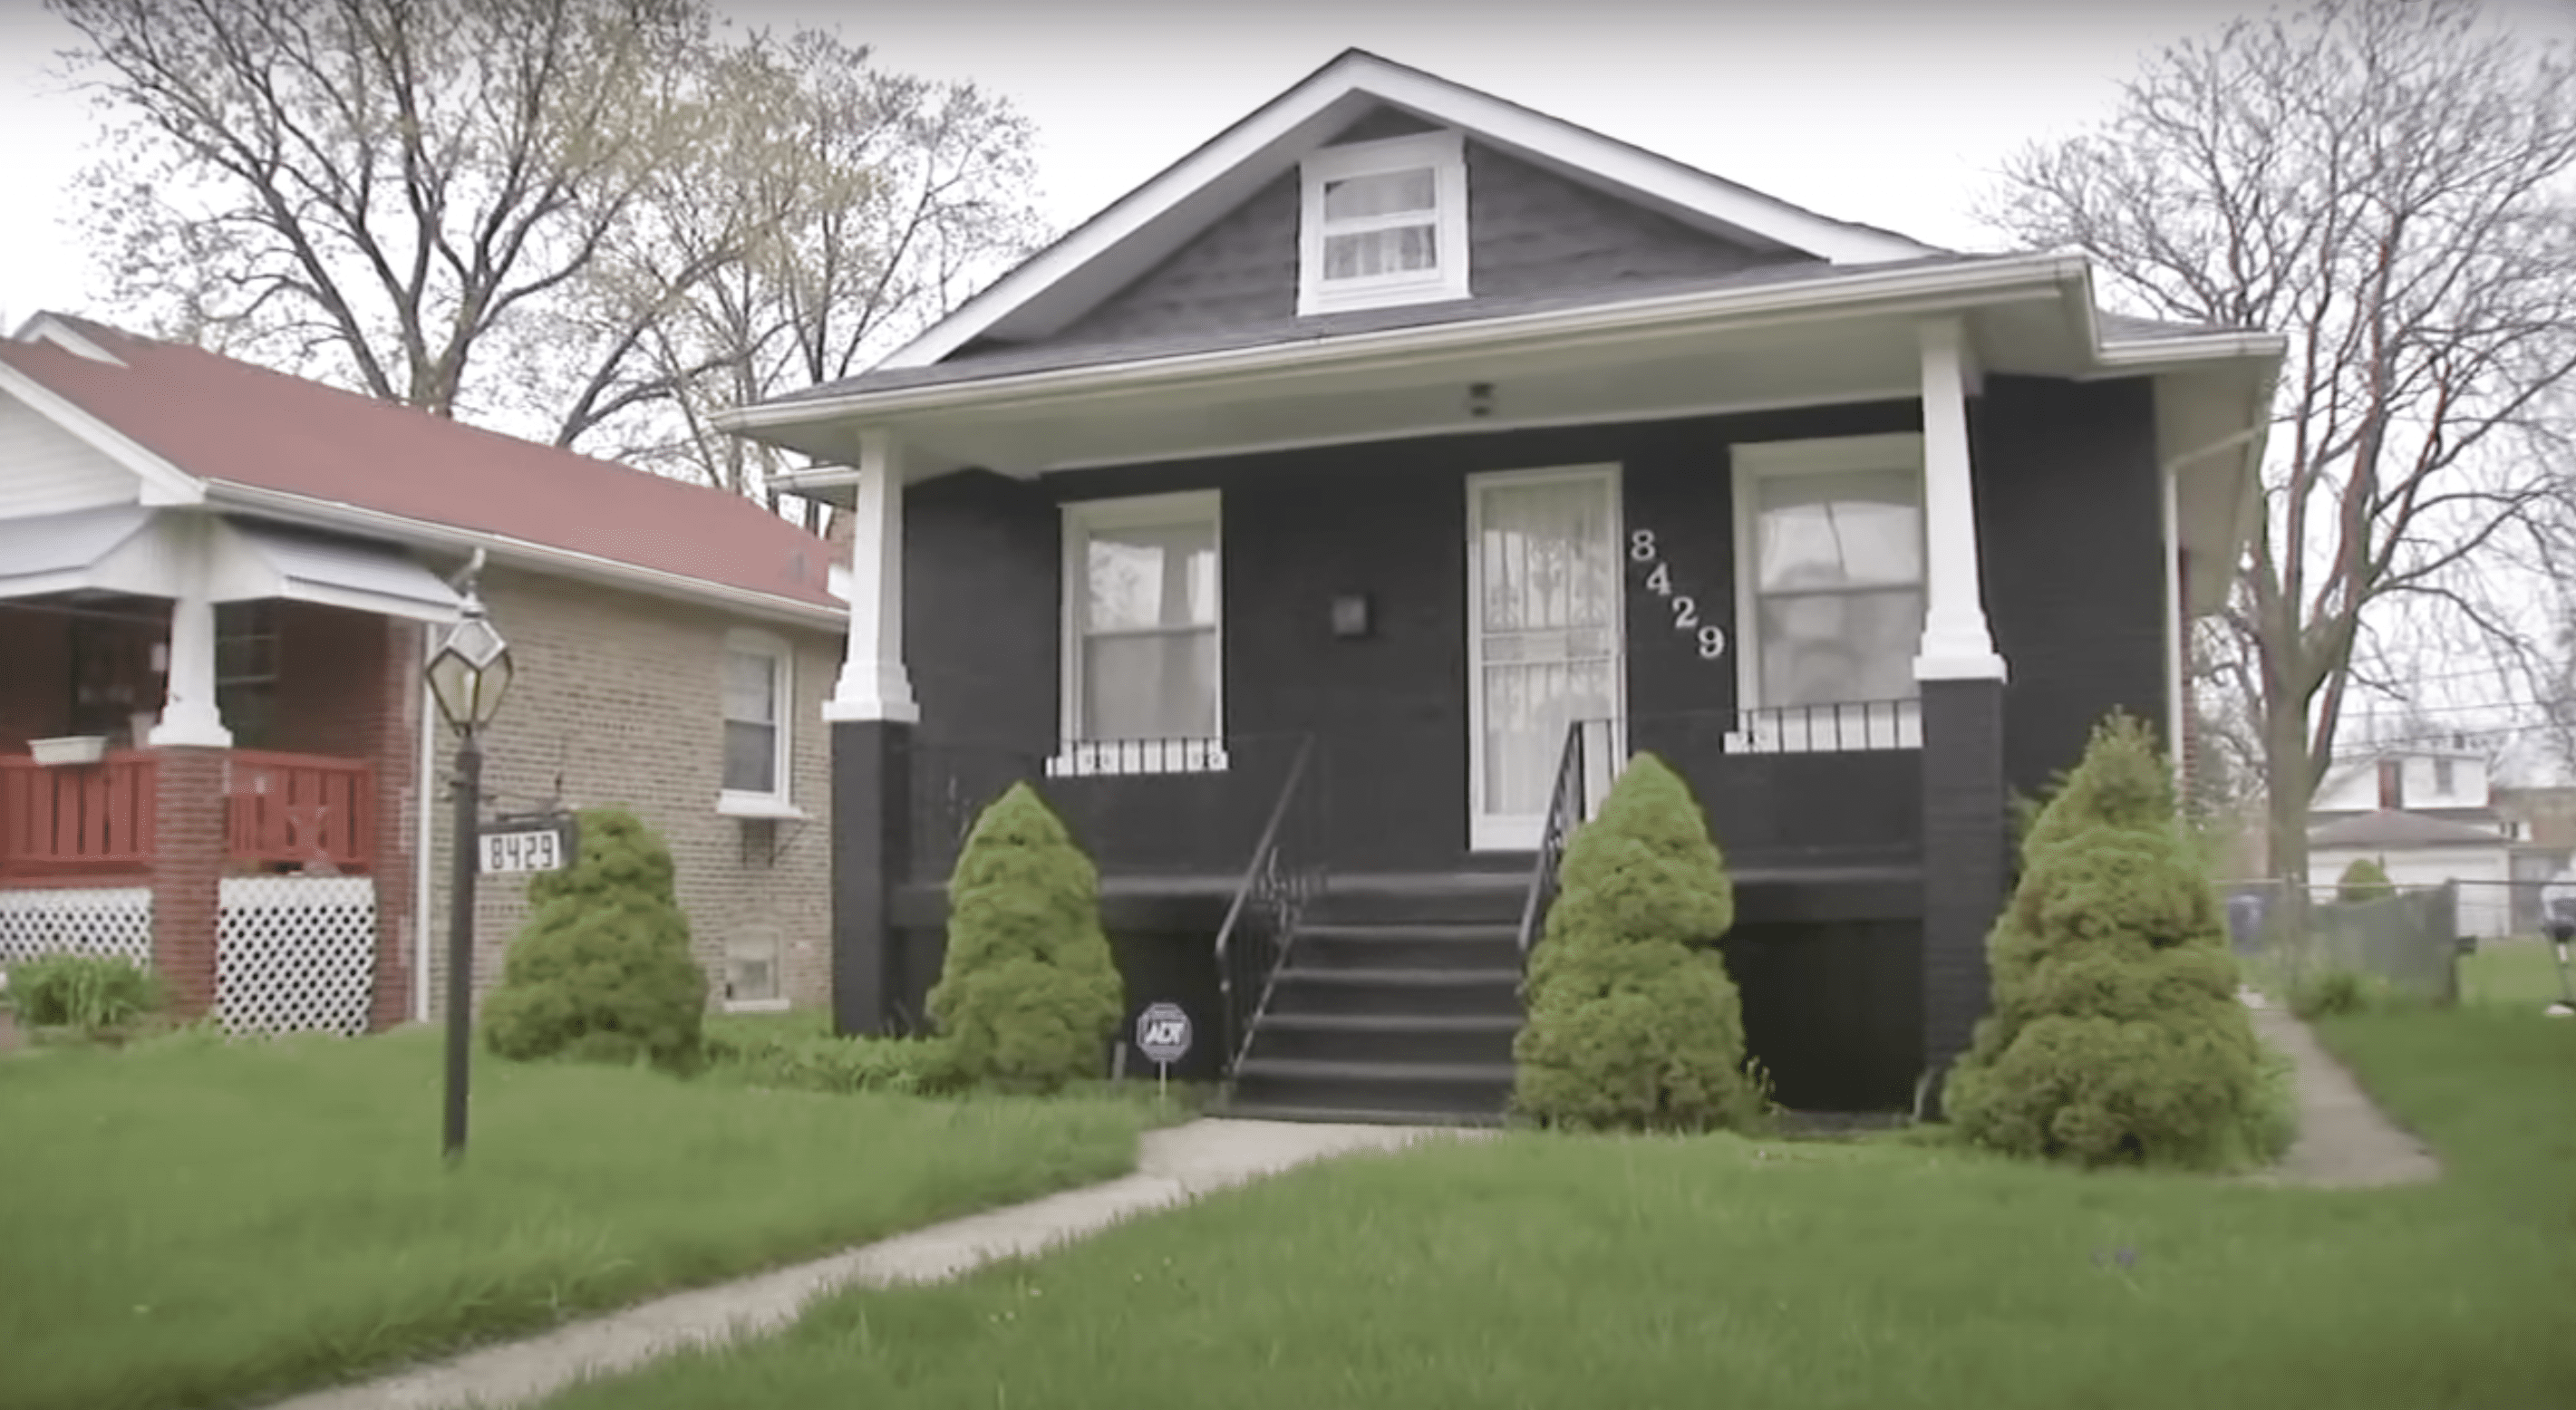 Danielle Cruz's home in the Chatham neighborhood. | Source: YouTube.com/ABC 7 Chicago